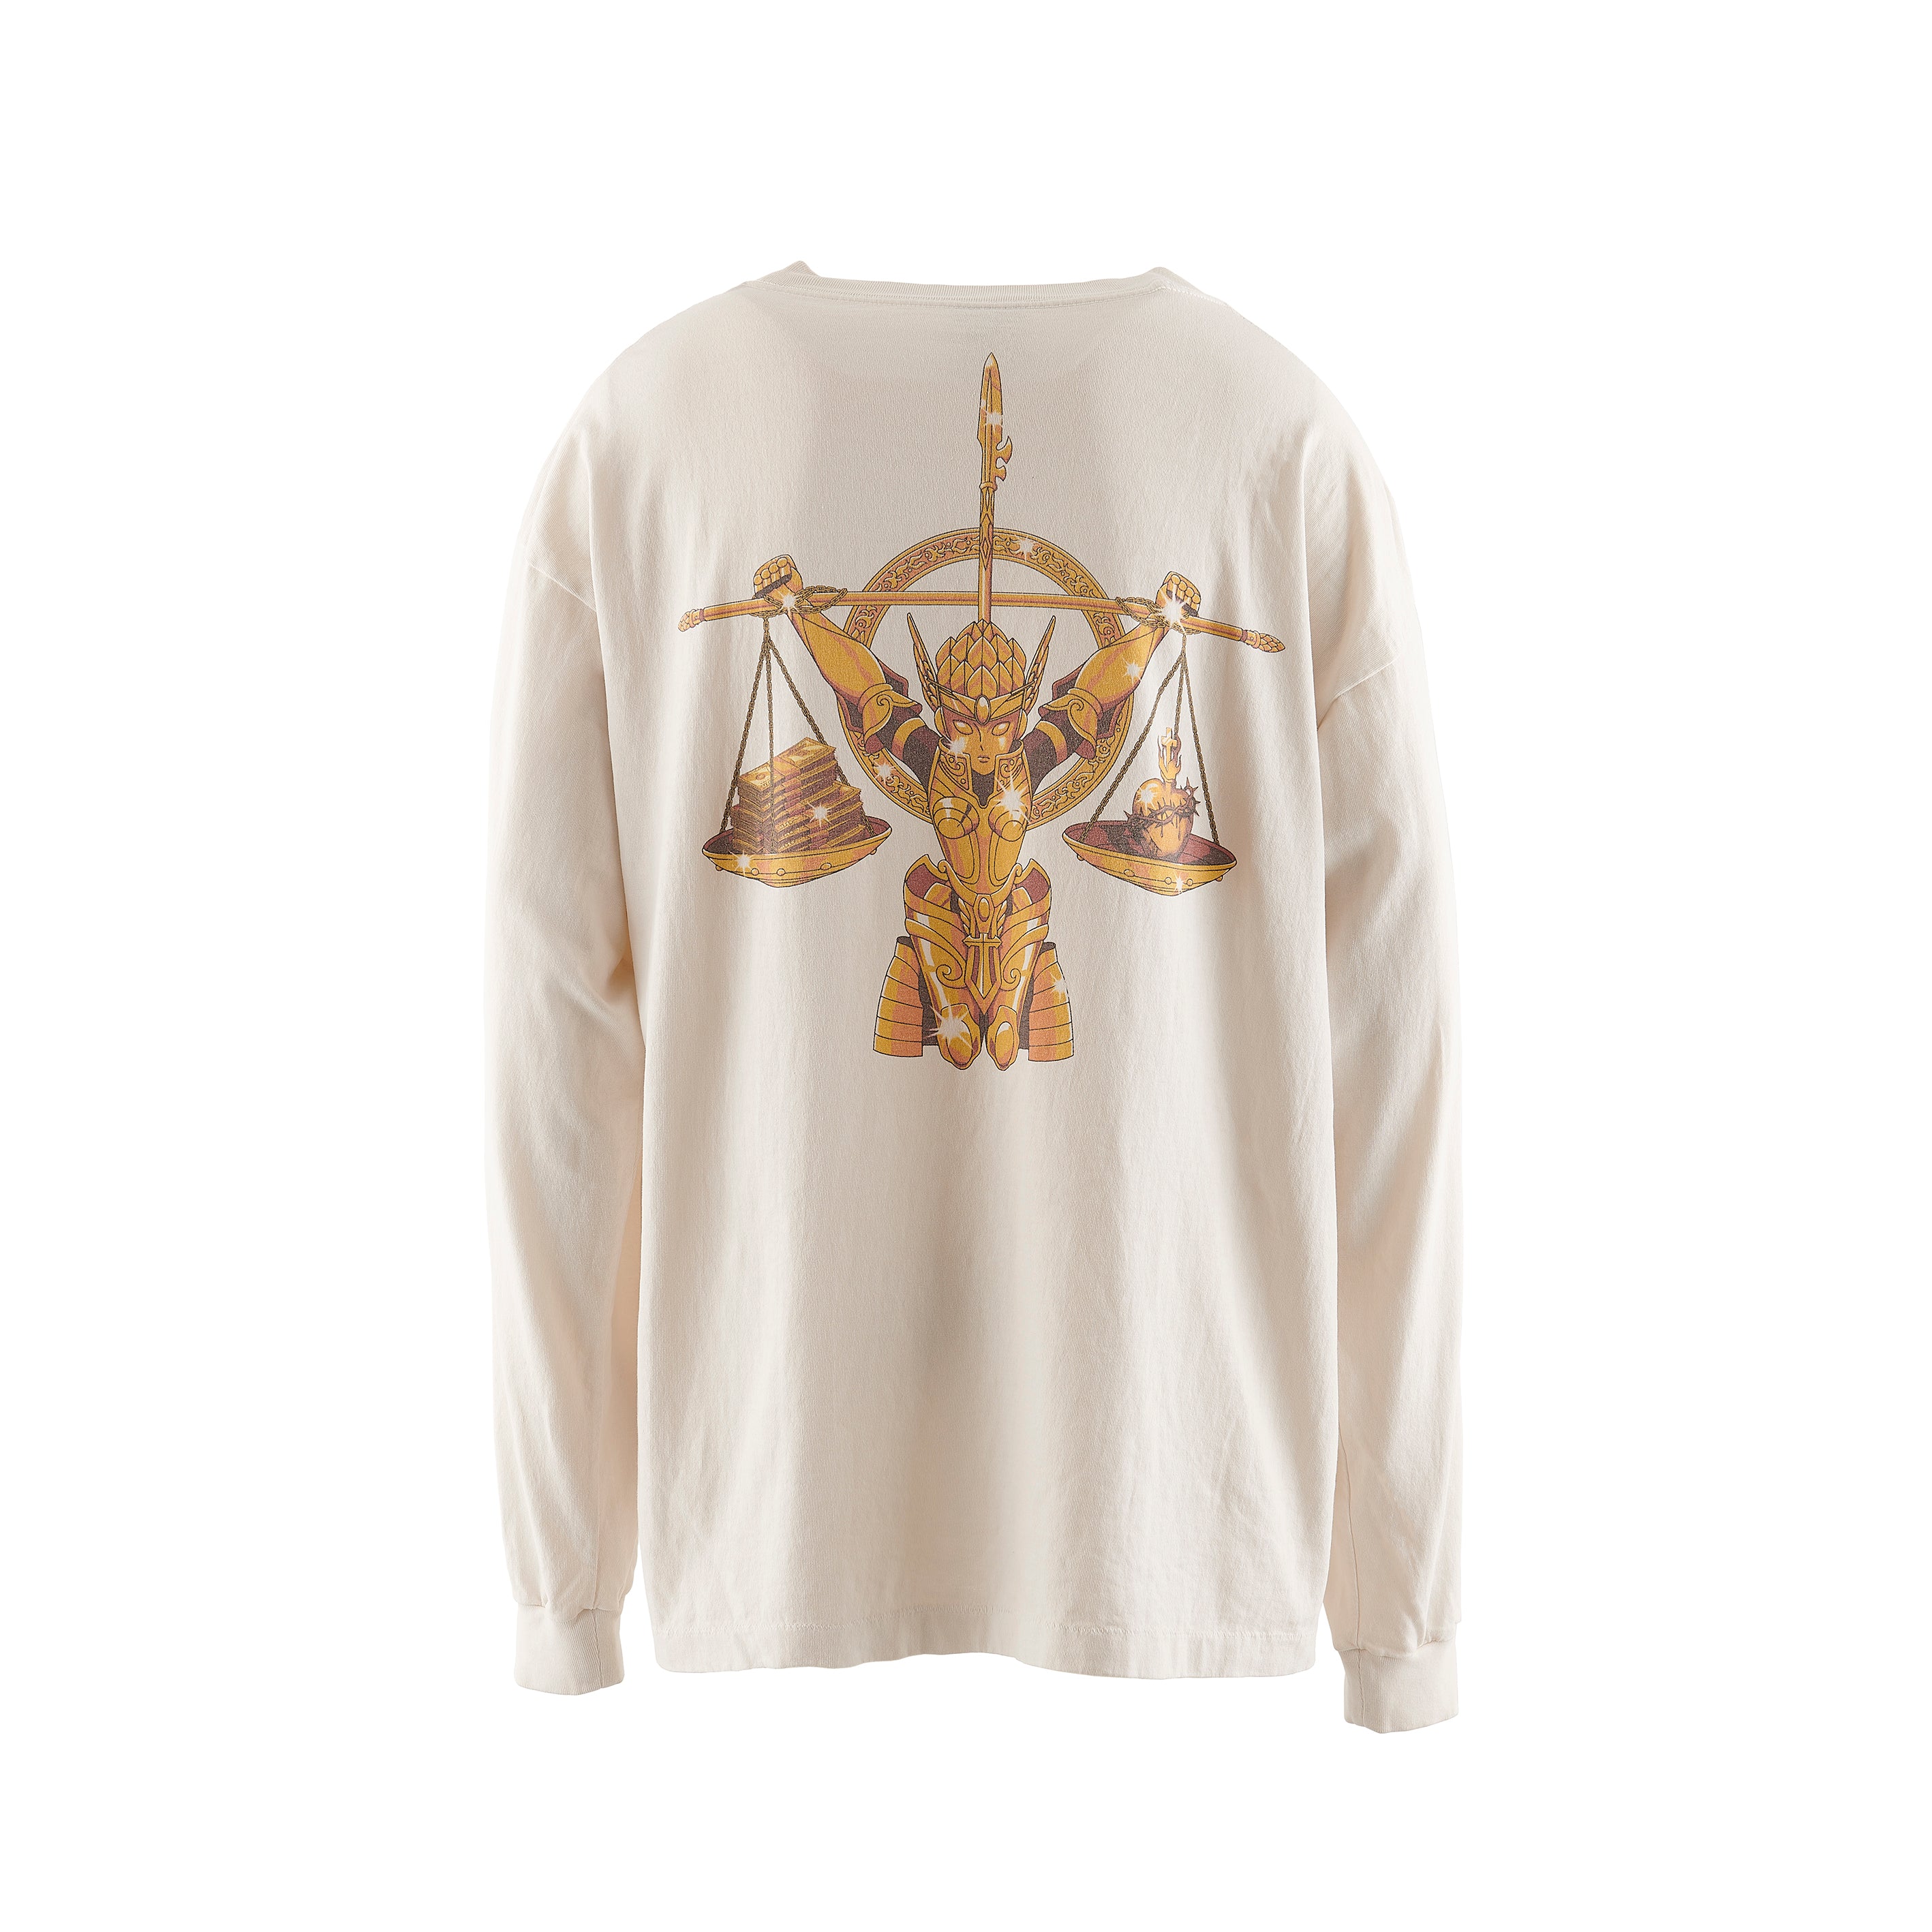 SAINT MICHAEL × CLOT LONG SLEEVE T-SHIRTS ' 聖闘士 ' - COLLABORATION - / Saint Michael